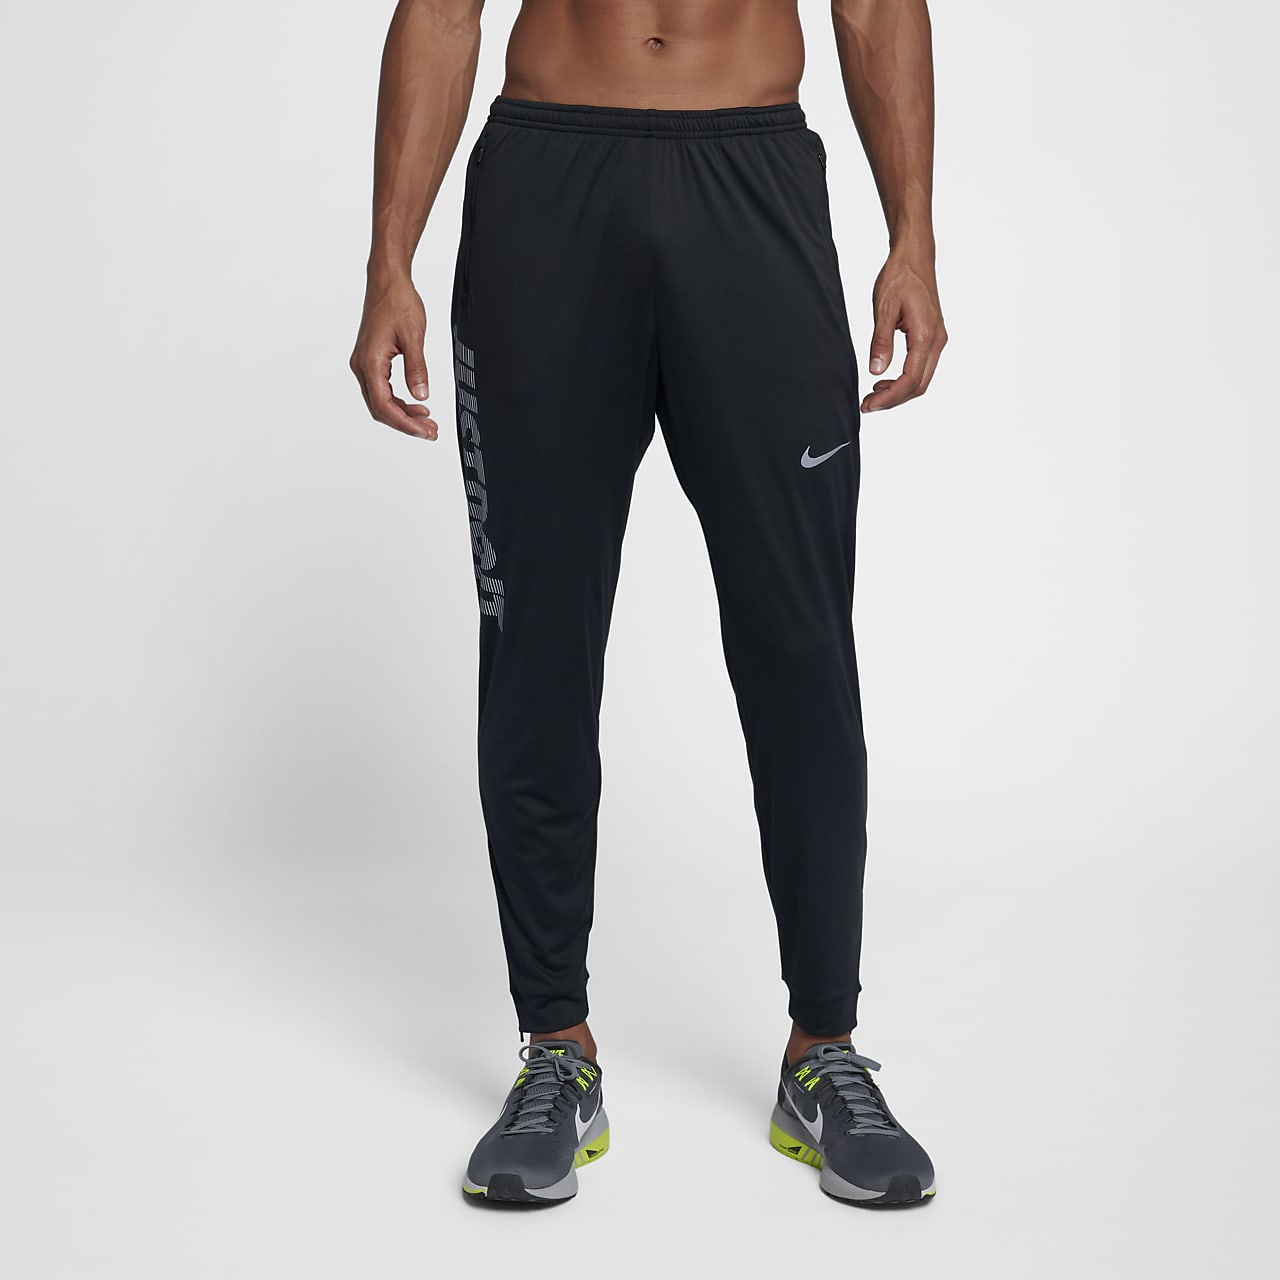 Men's adidas Running Clothing | Pro:Direct Running